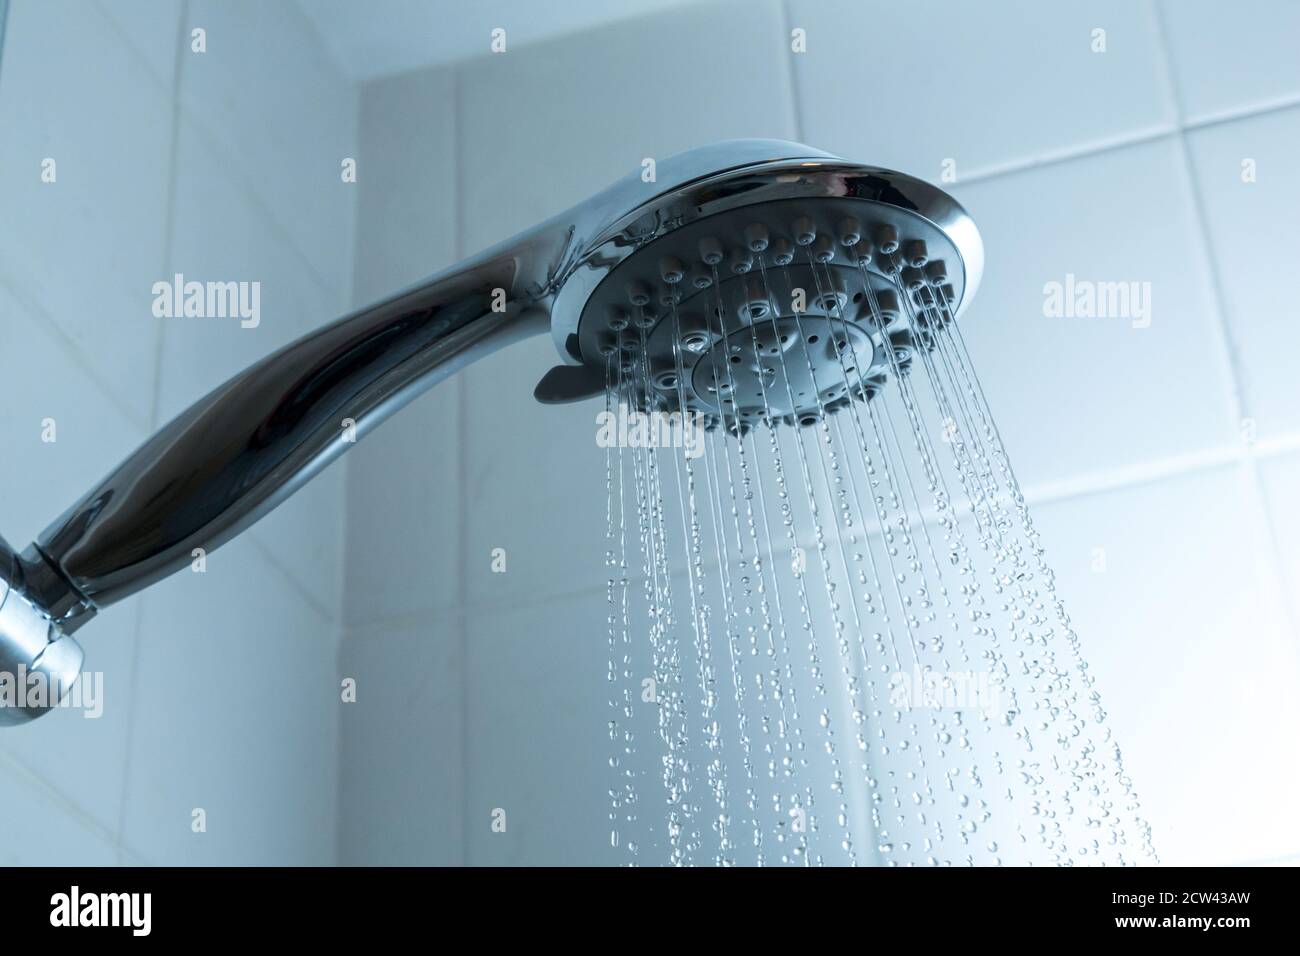 shower head water spray Stock Photo